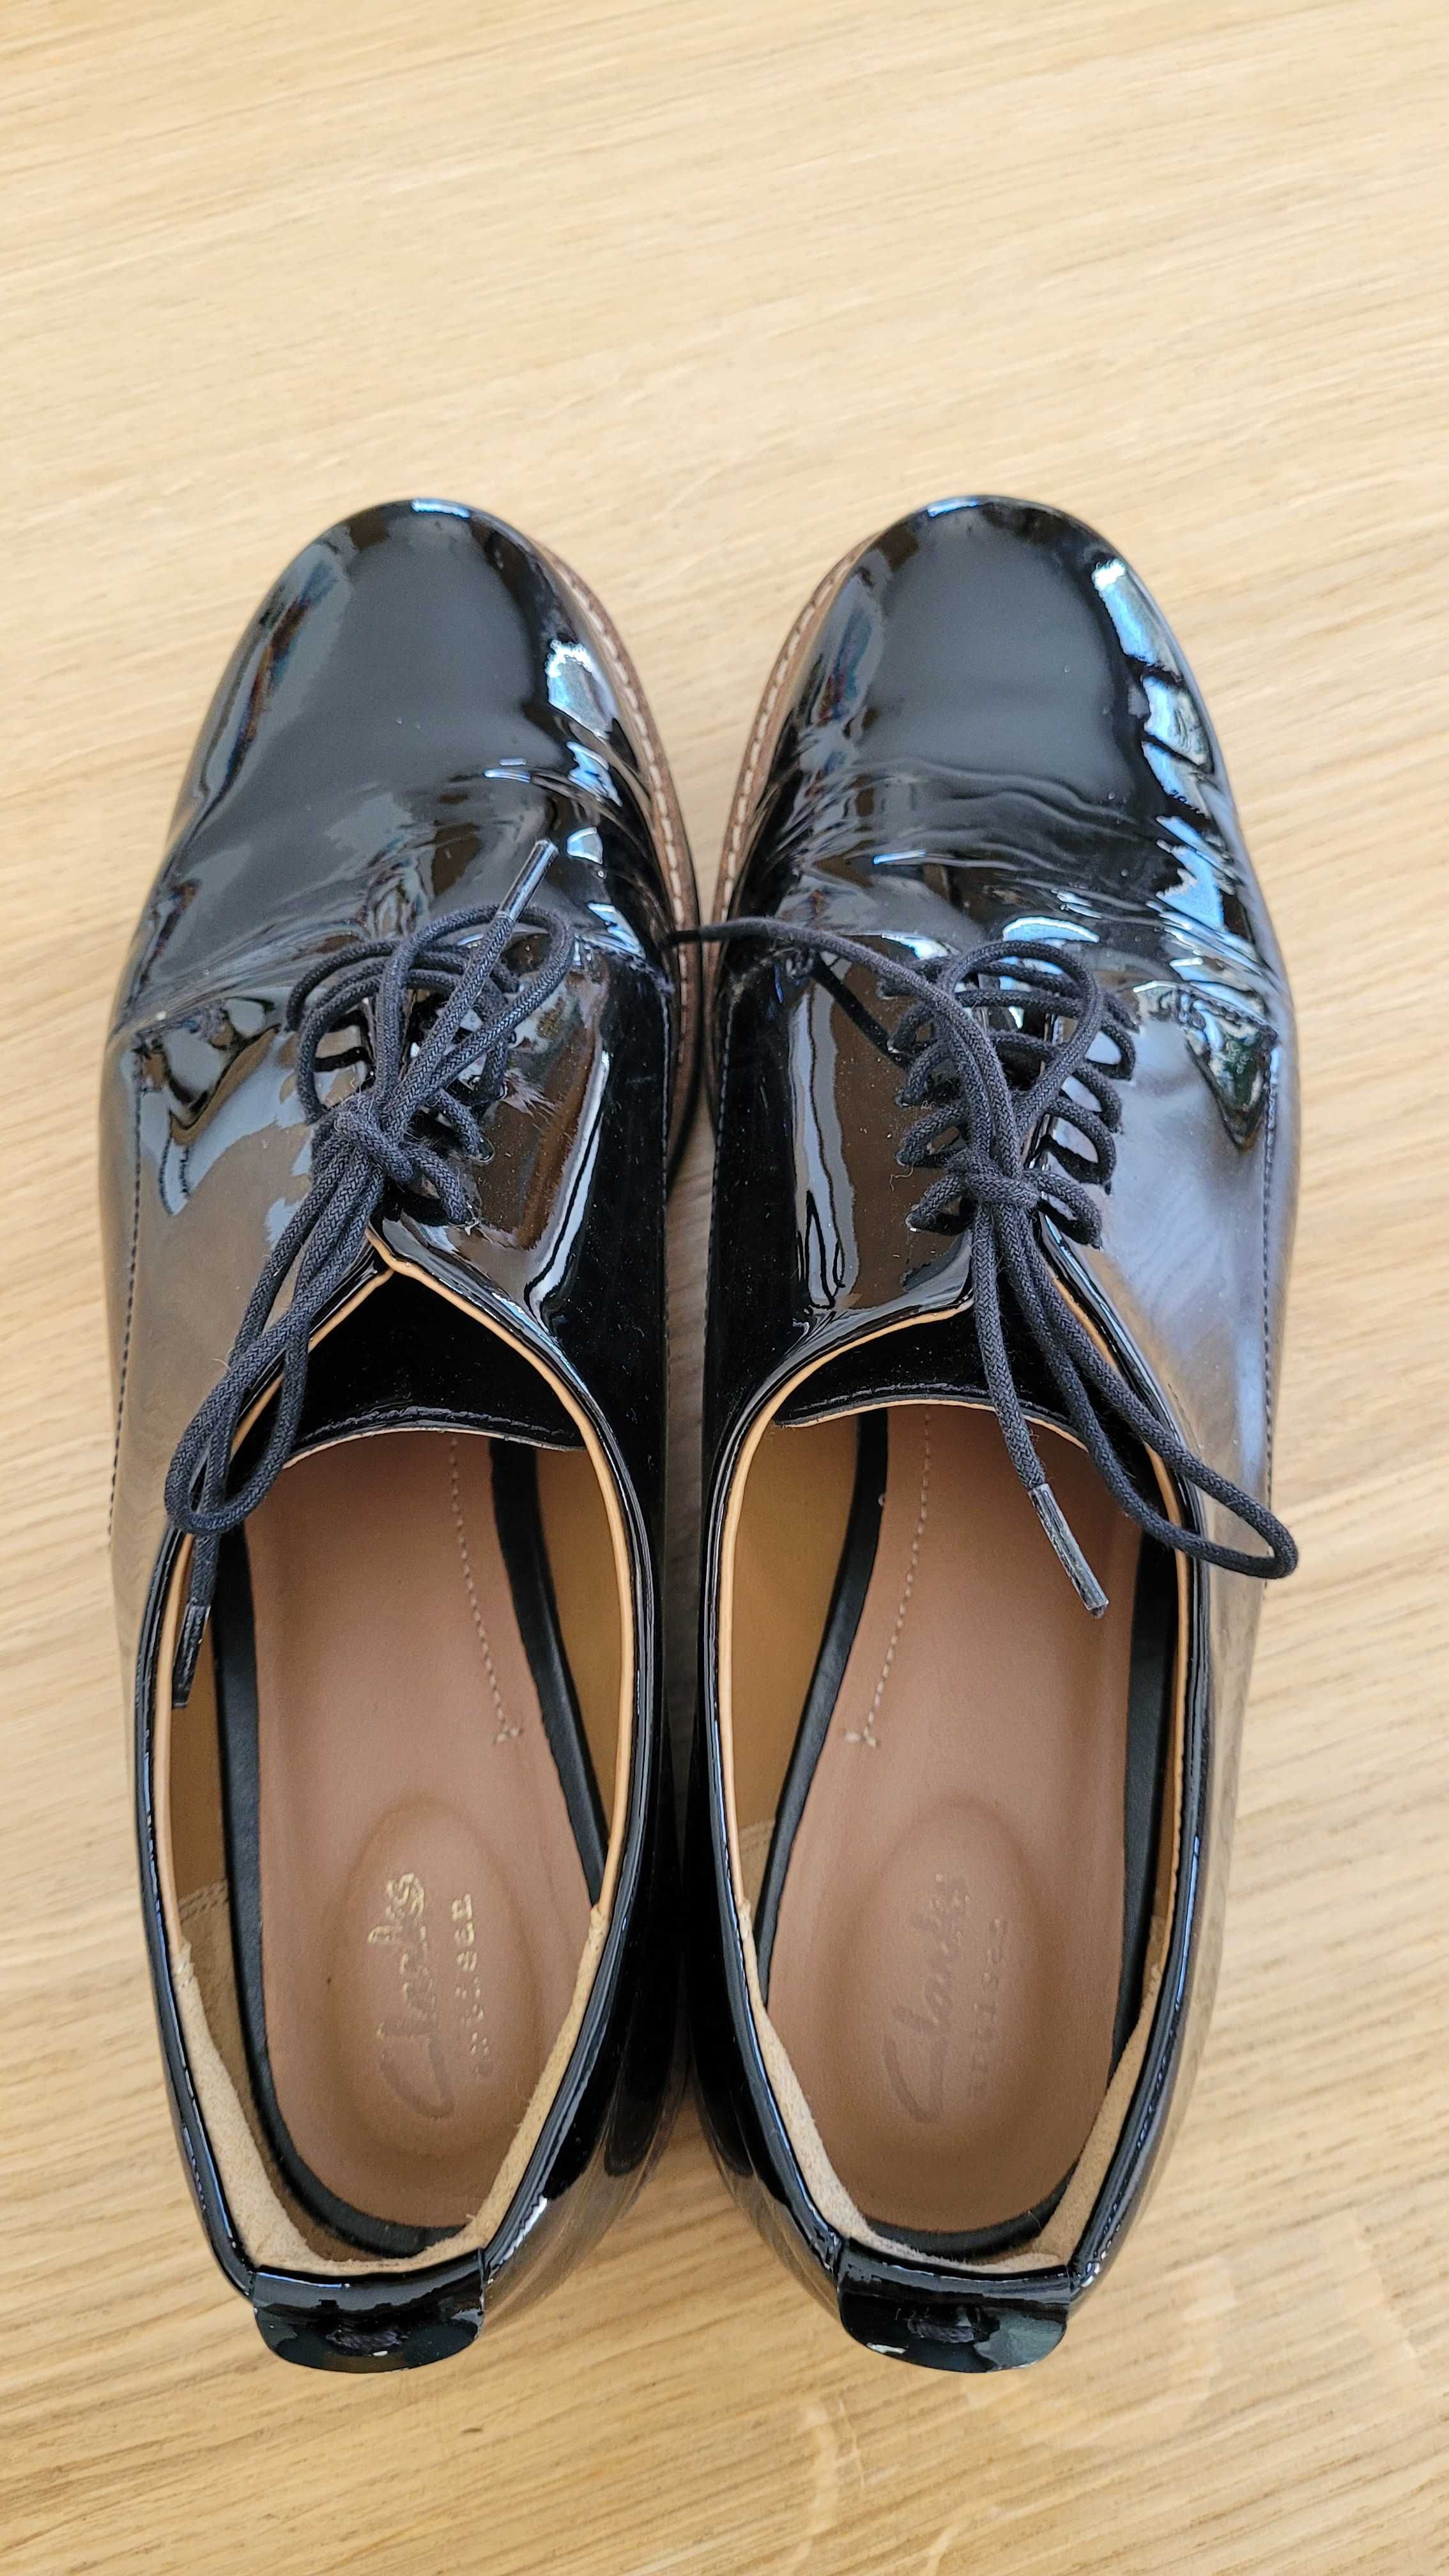 Buty skórzane lakierowane Clarks 42 26,5 cm